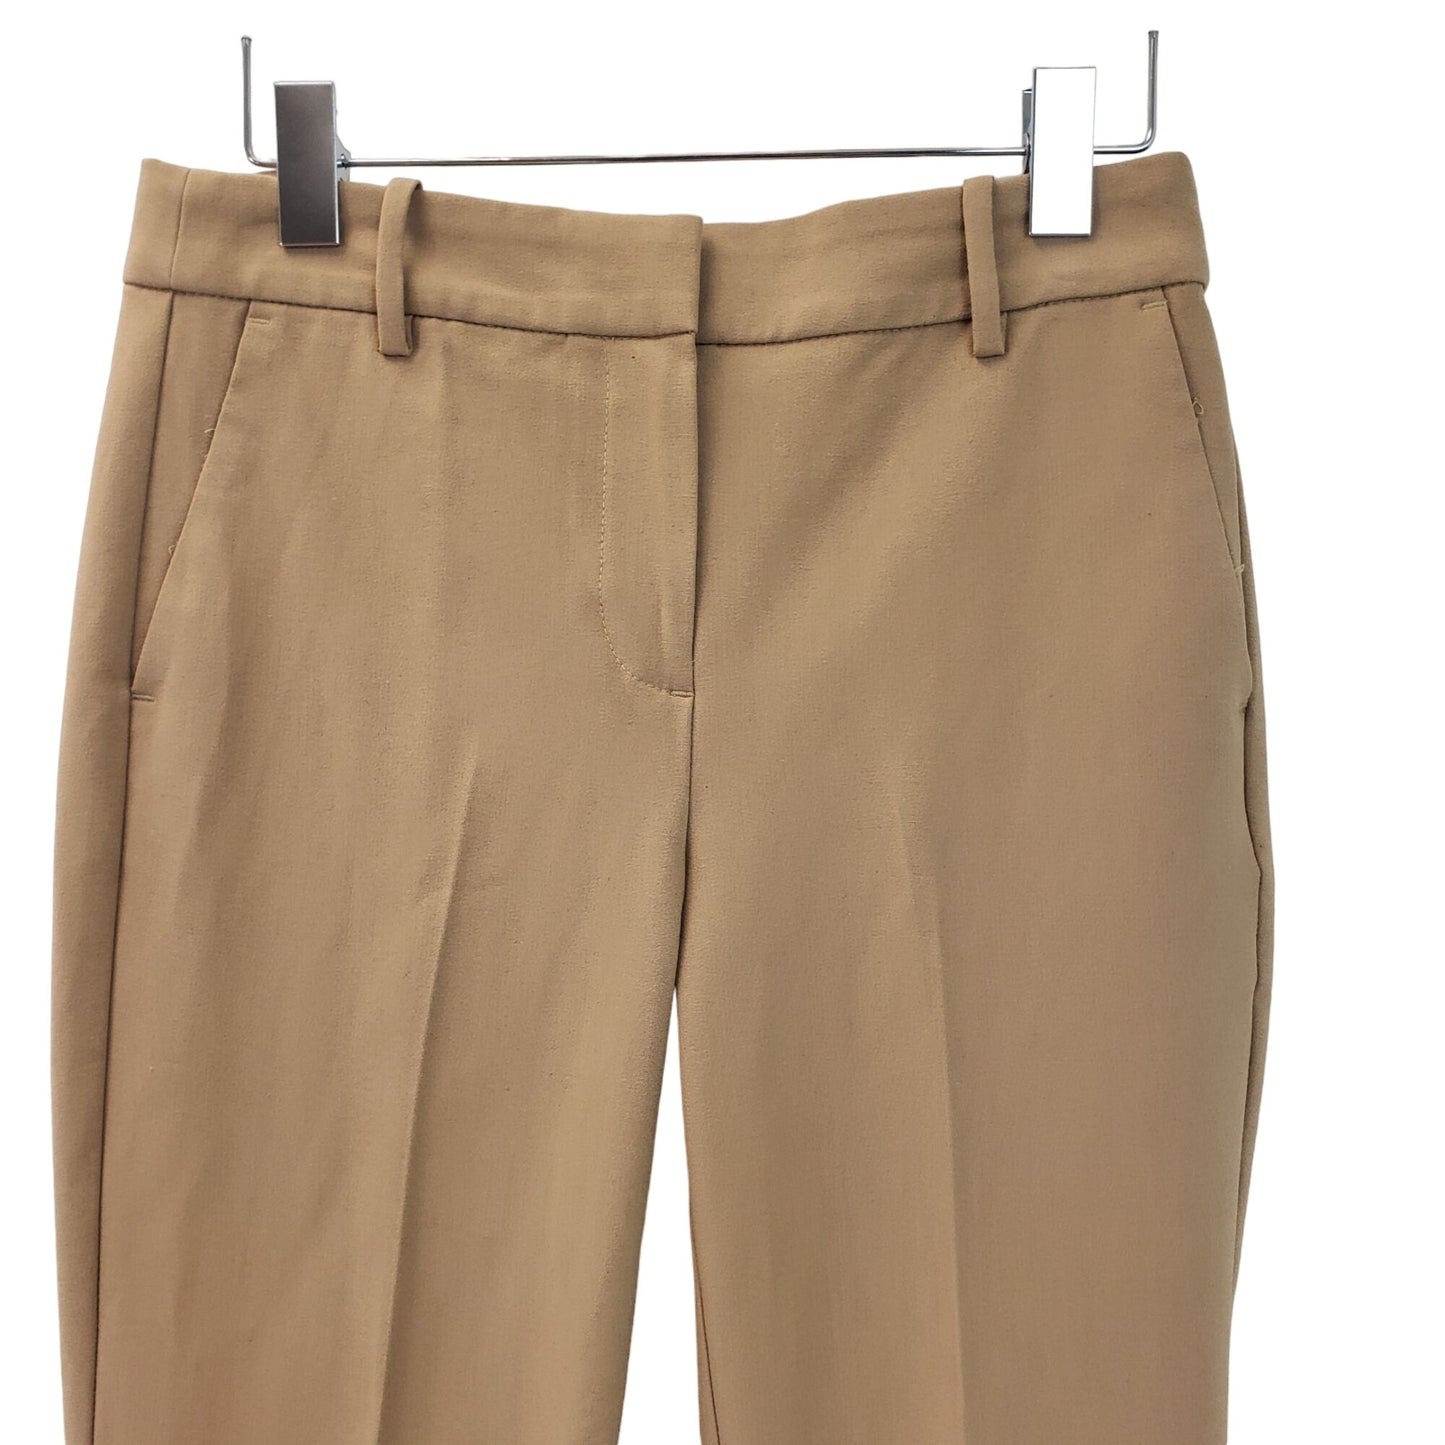 NWT J. Crew Factory Ruby Crop Trouser Pants Size 4 Petite